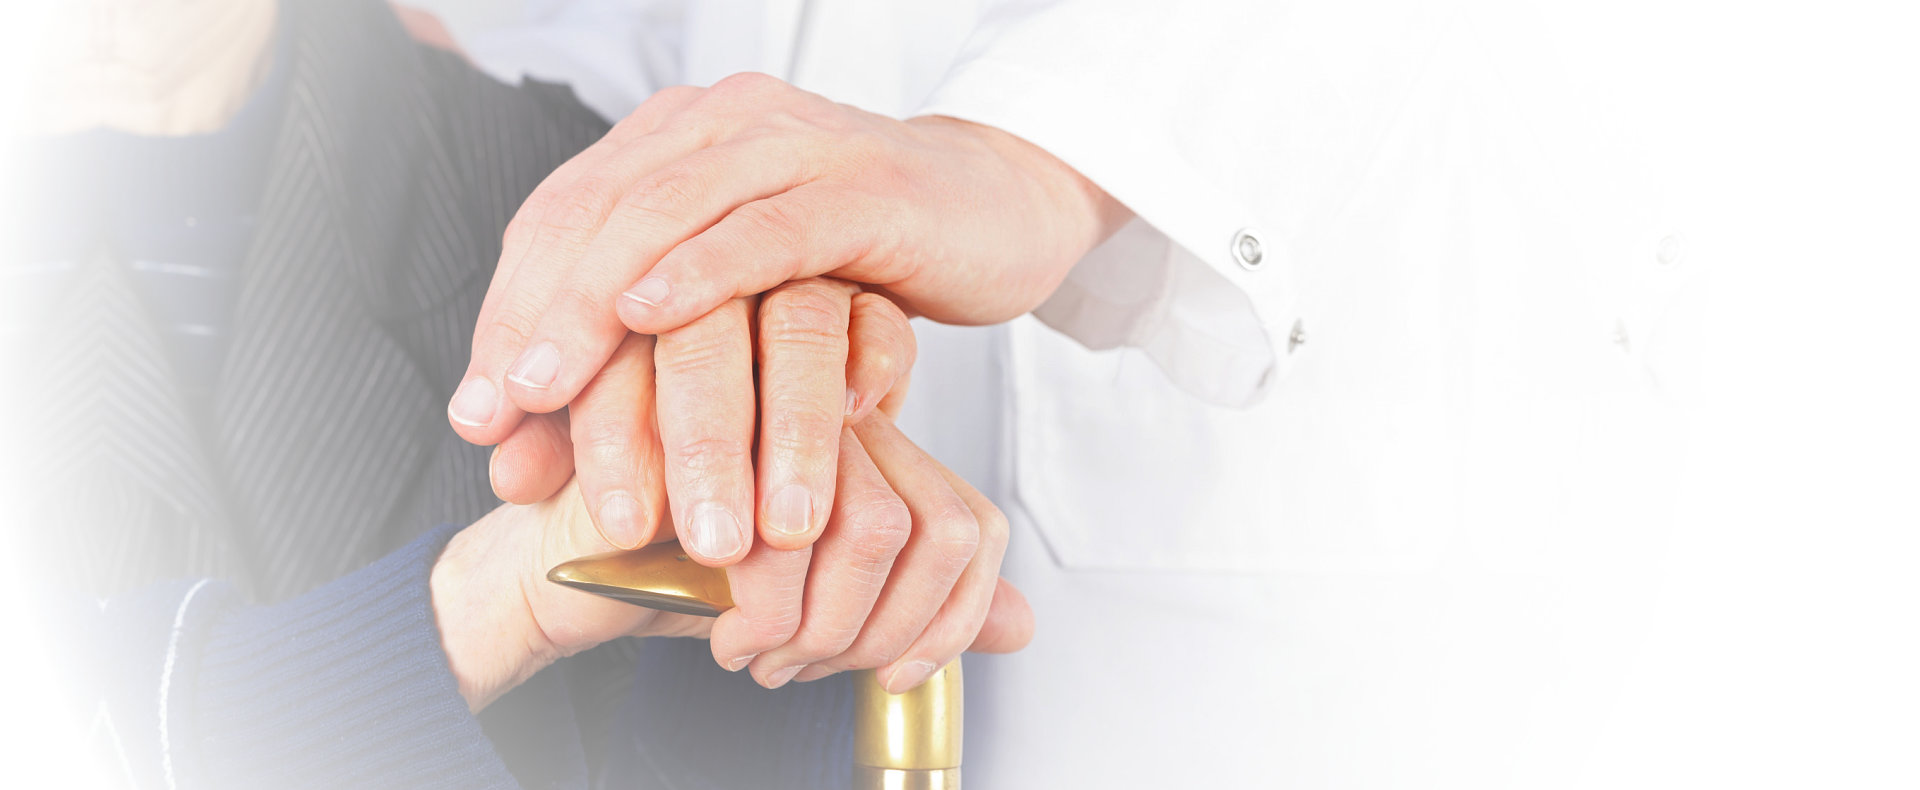 Elder and caregiver hand in hand